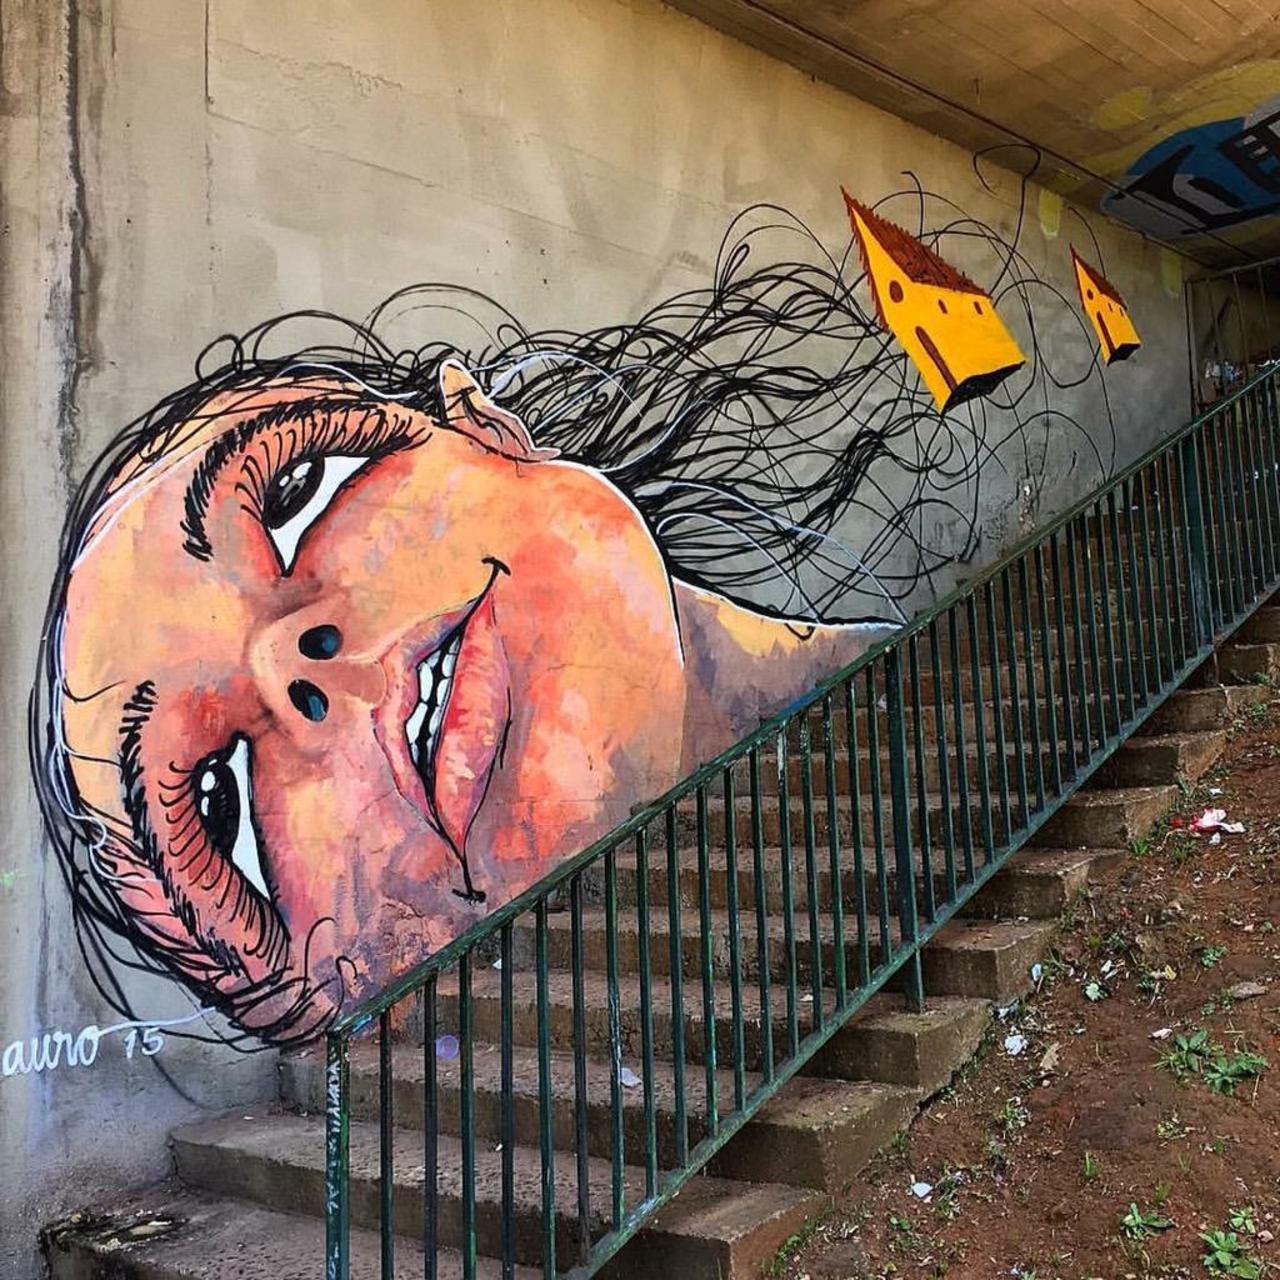 Street Art by Reveracidade in São Paulo 

#art #graffiti #mural #streetart http://t.co/HwznCqUVbs